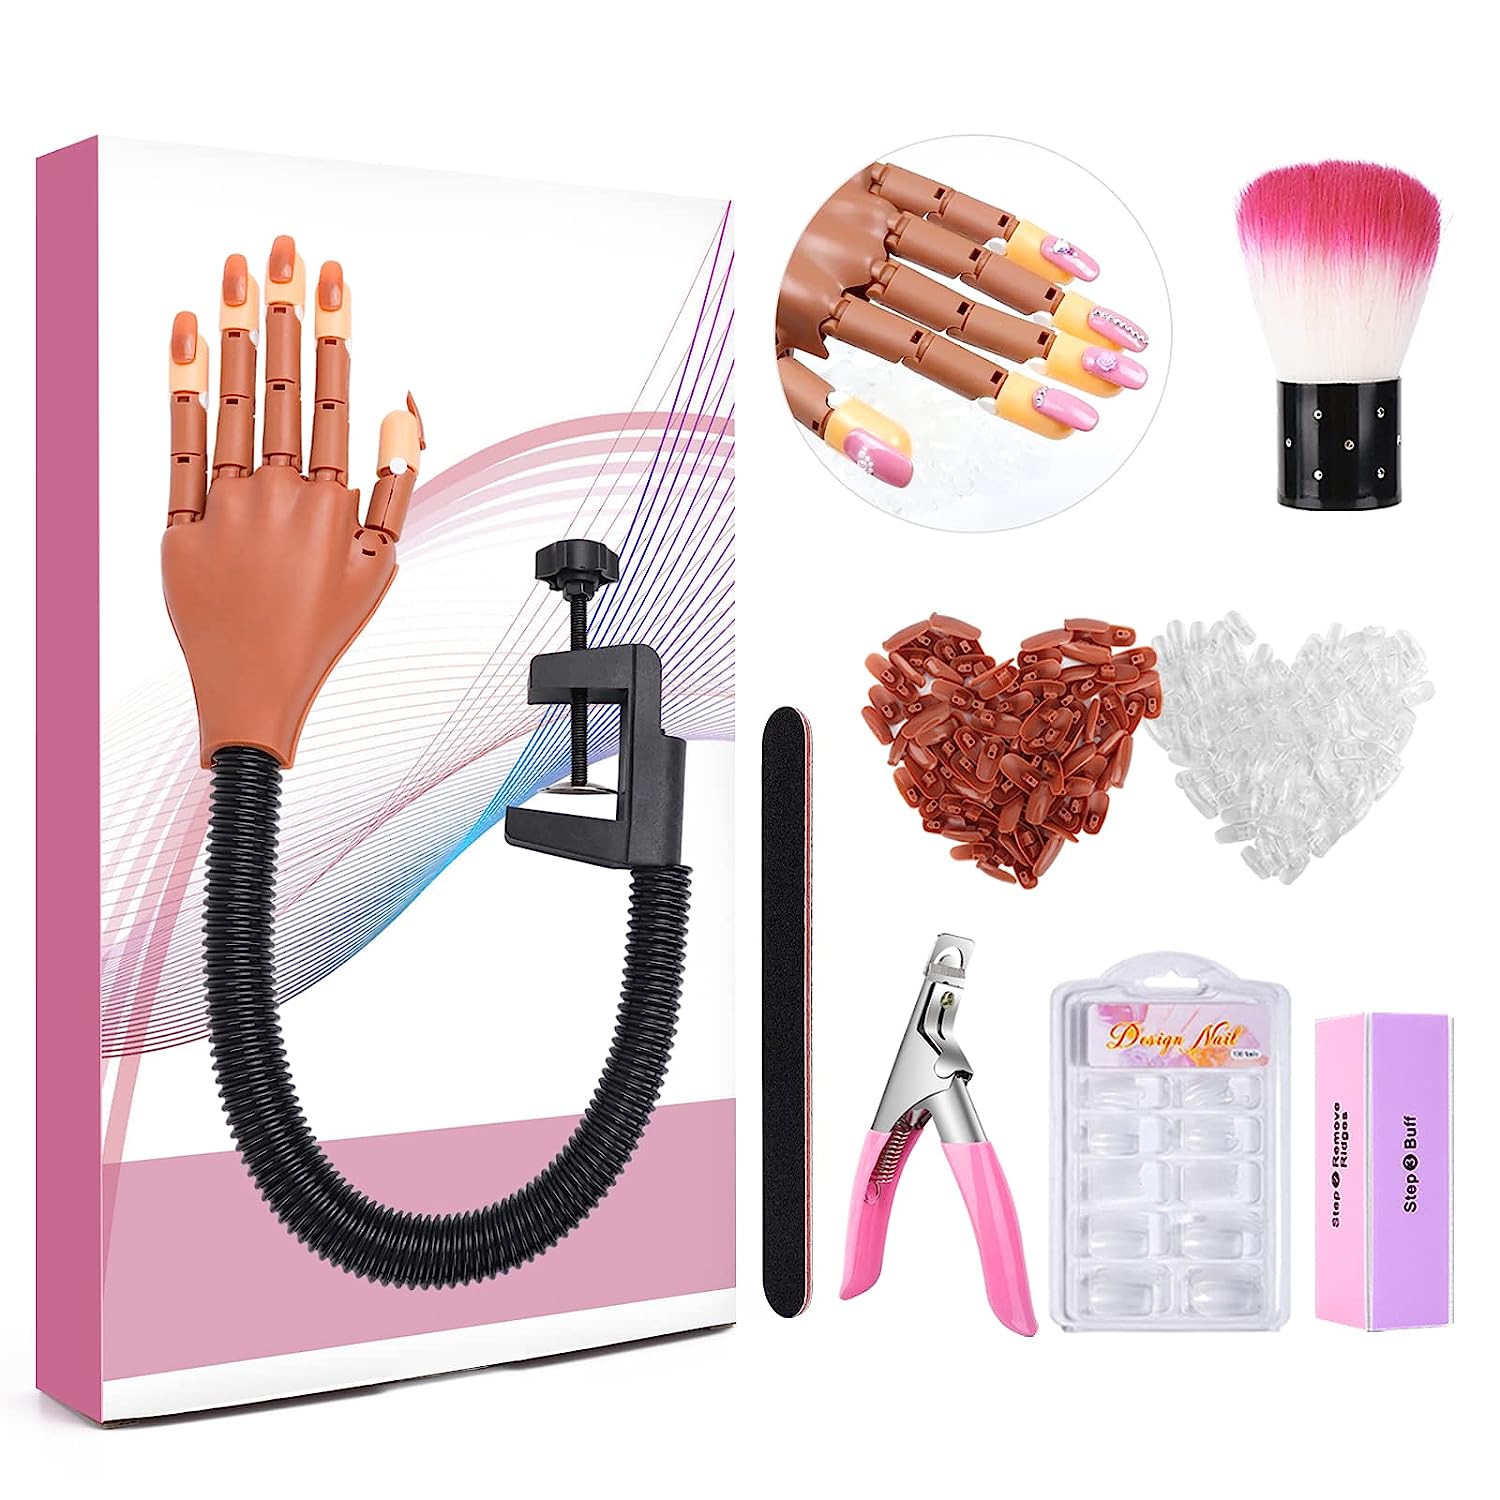 300 PCS Practice Hand for Acrylic Nails Training Kit – Ross Beauty